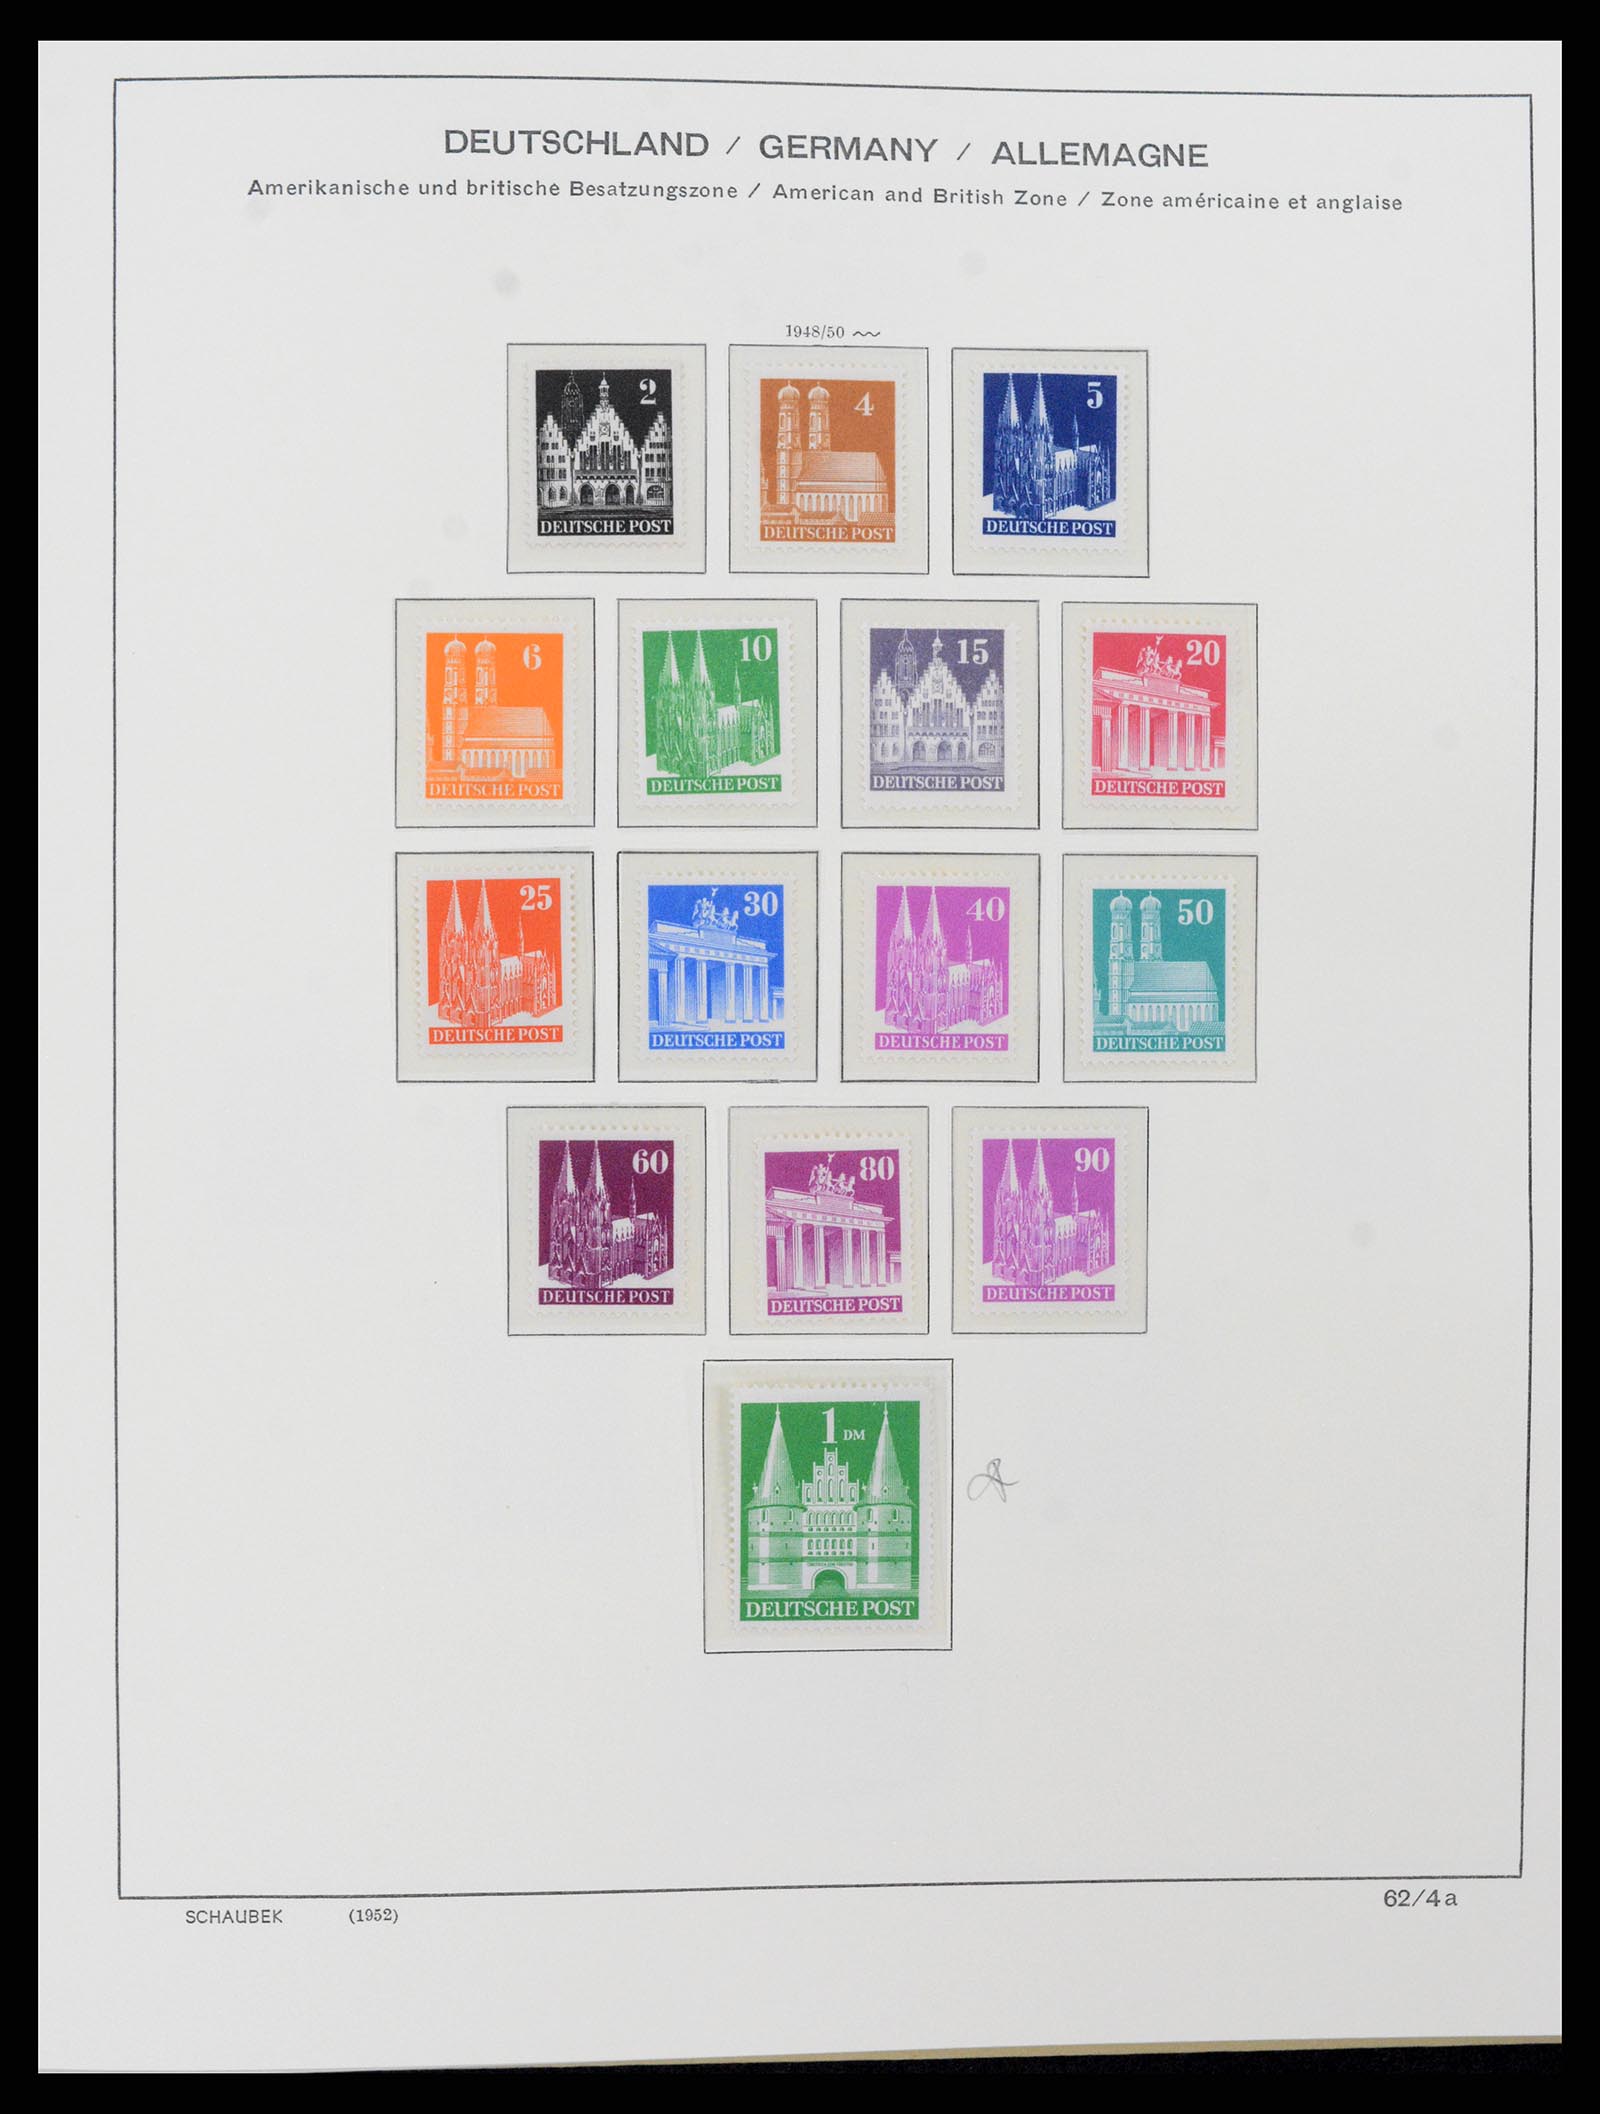 37645 015 - Stamp collection 37645 German Zones 1945-1949.